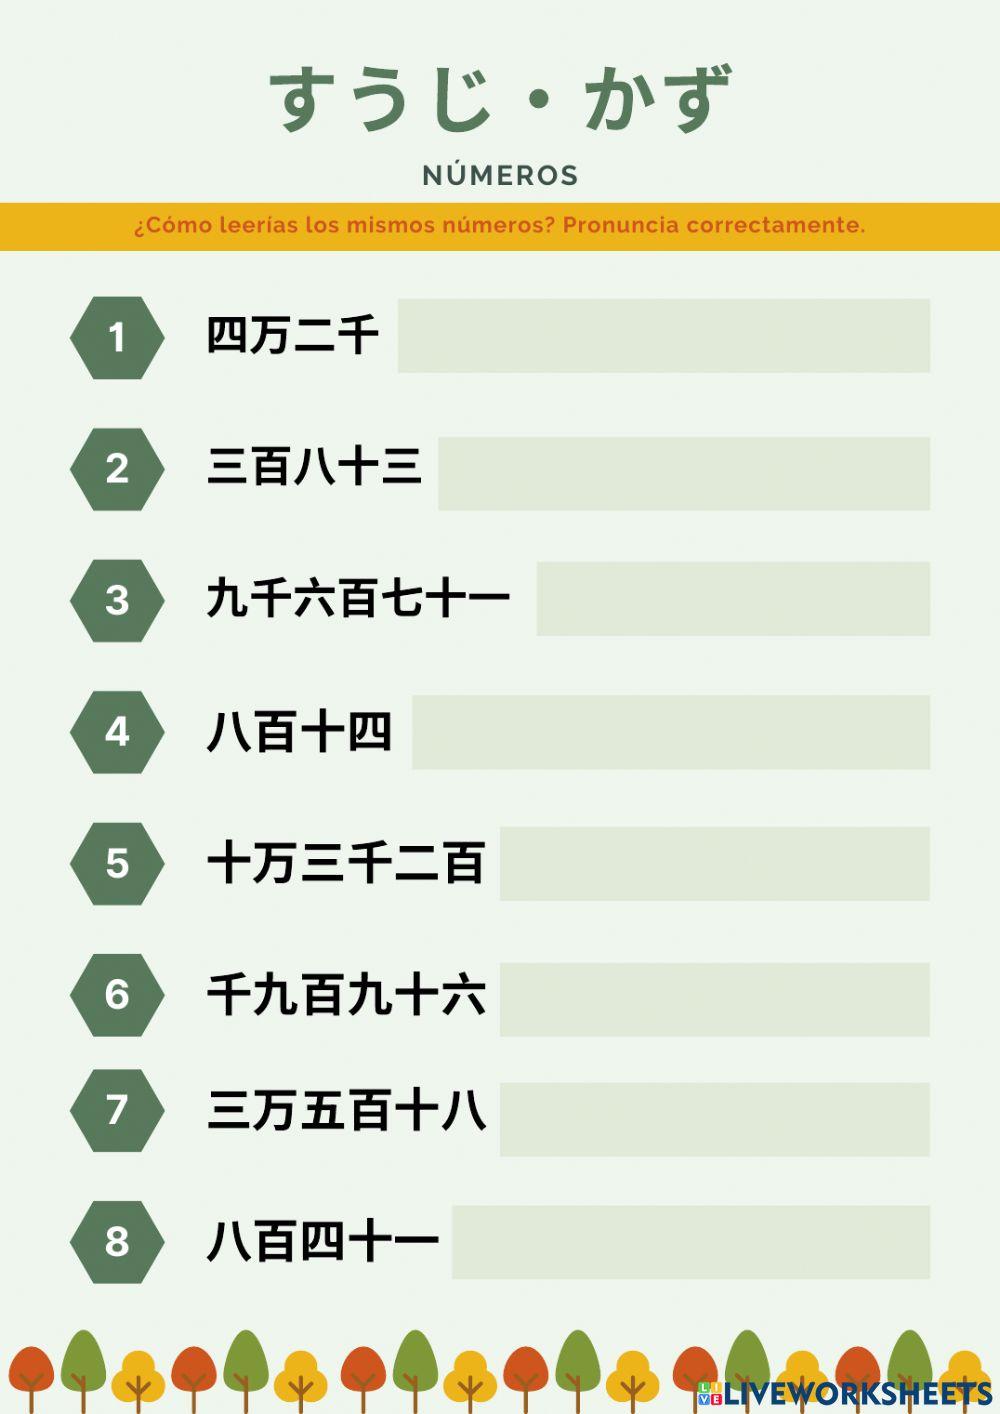 Práctica de números grandes en japonés